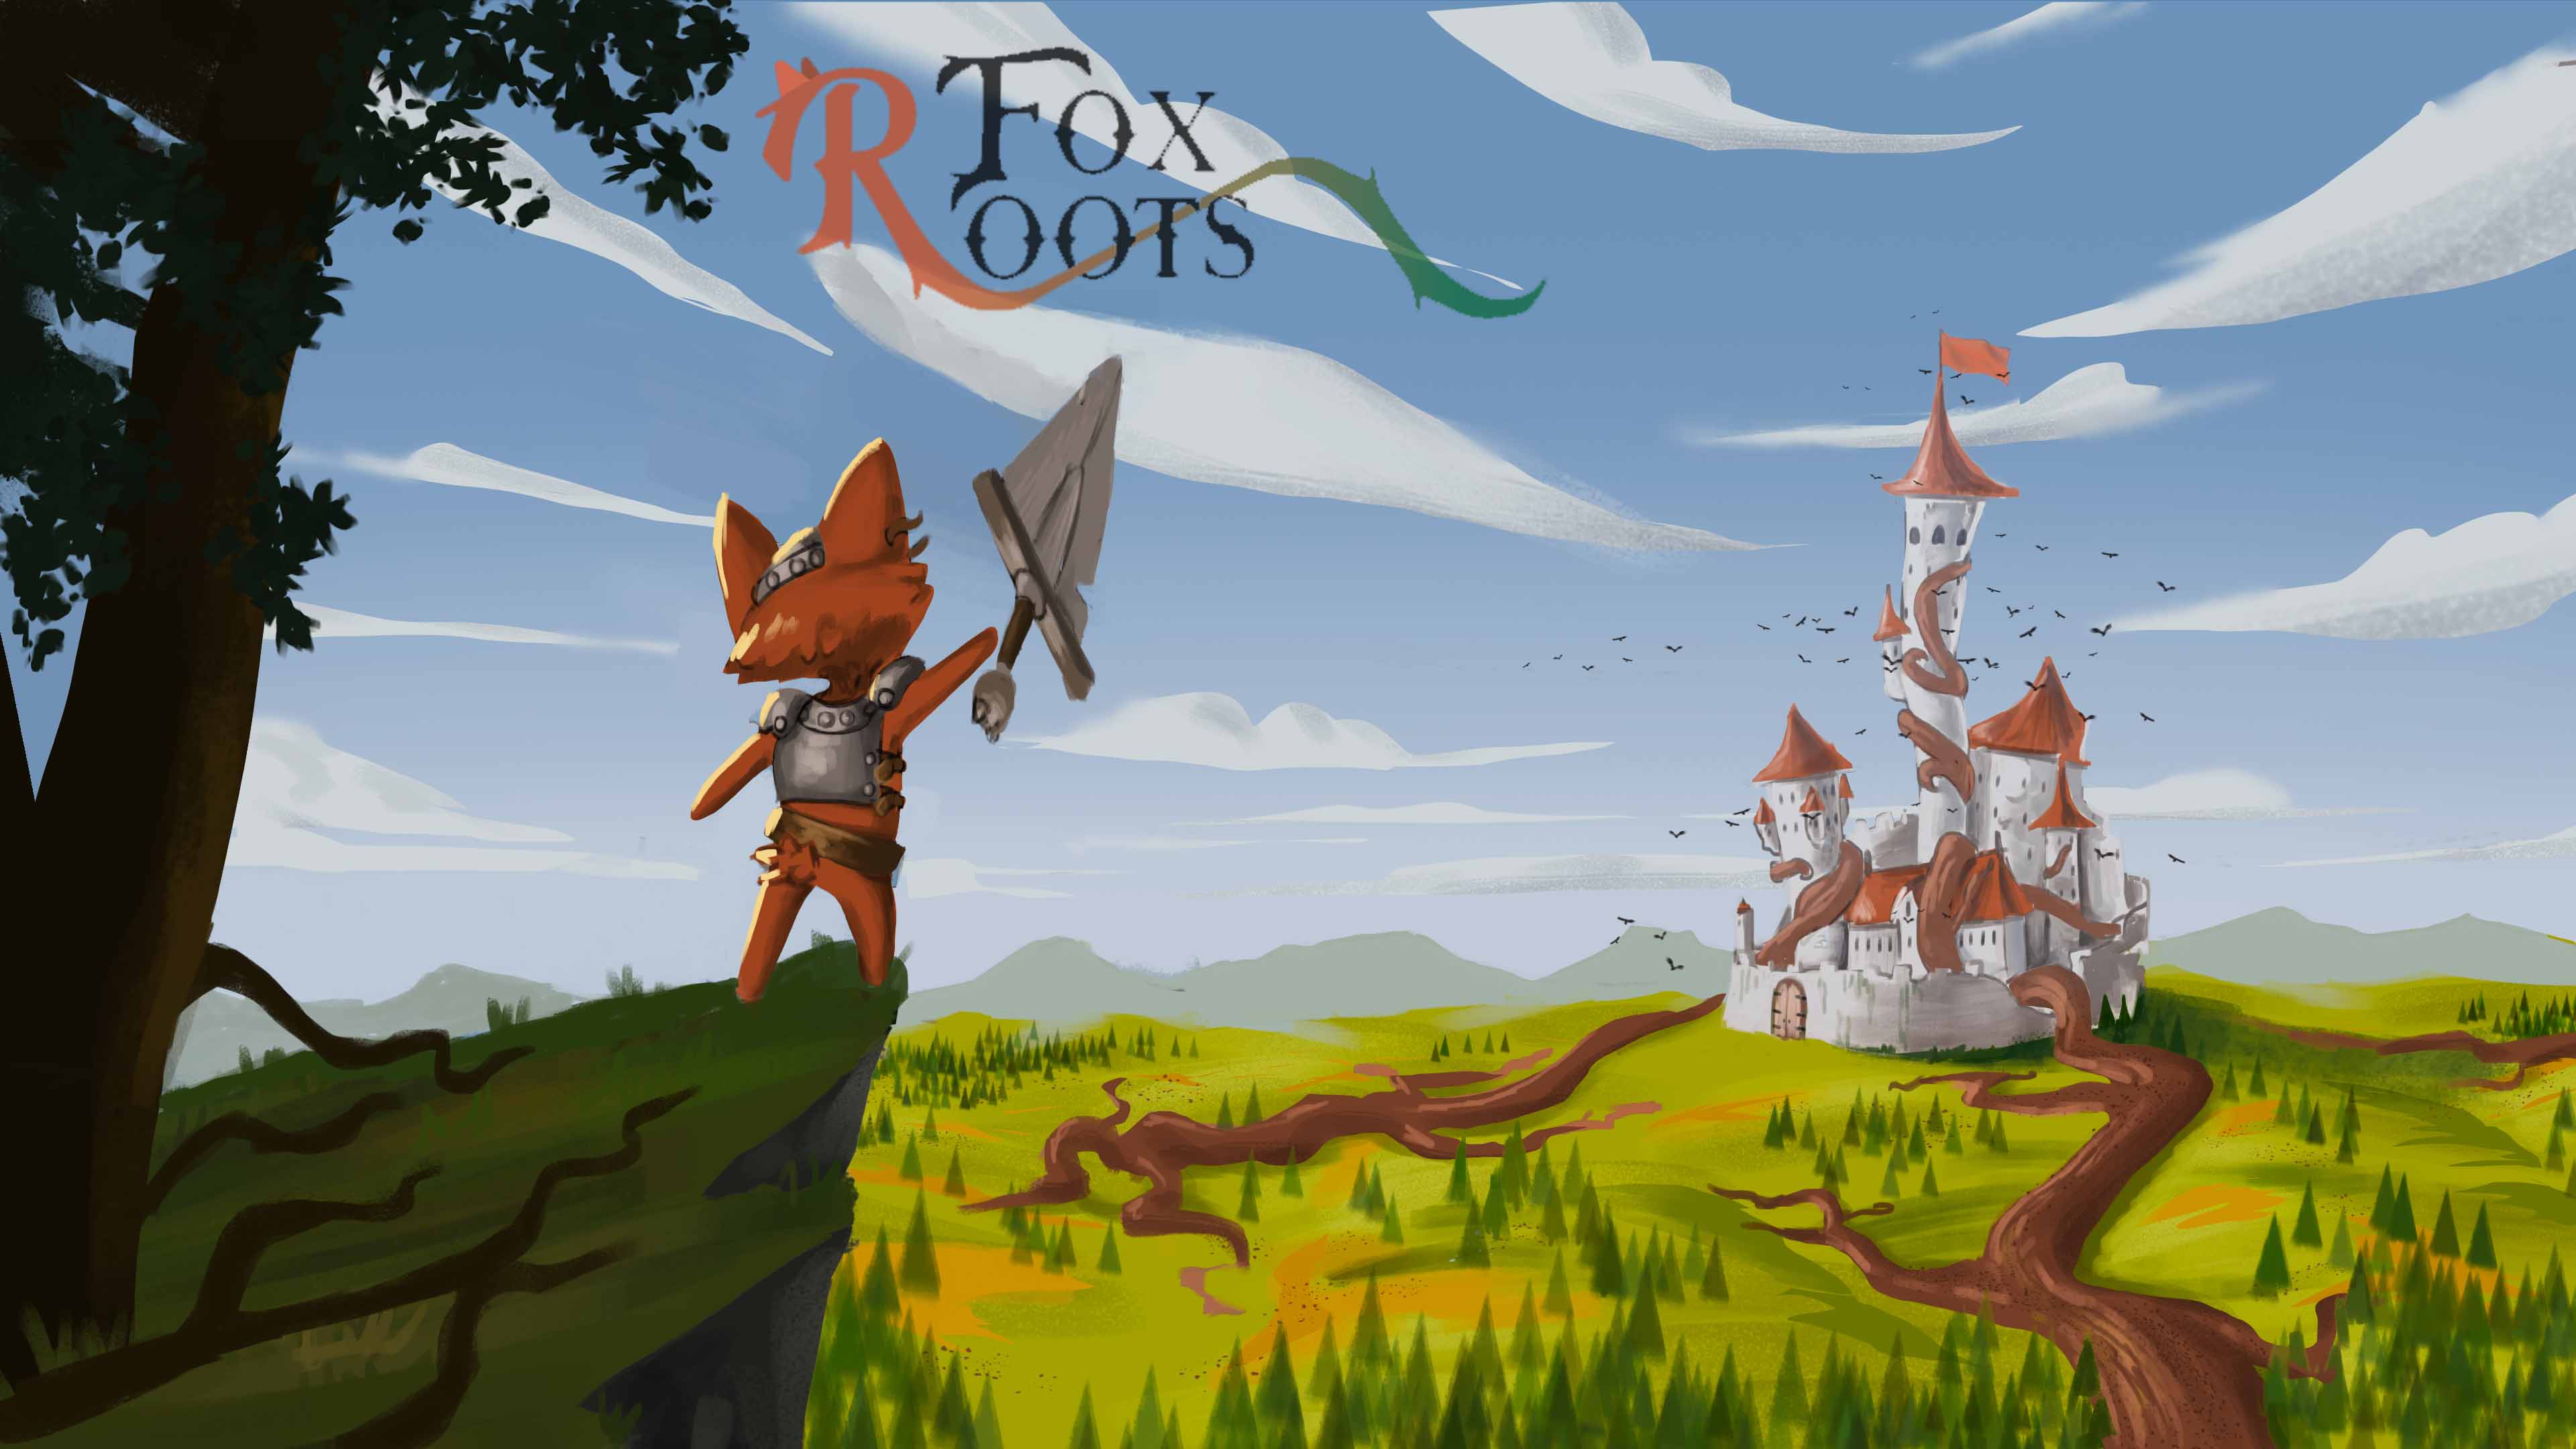 FoxRoots